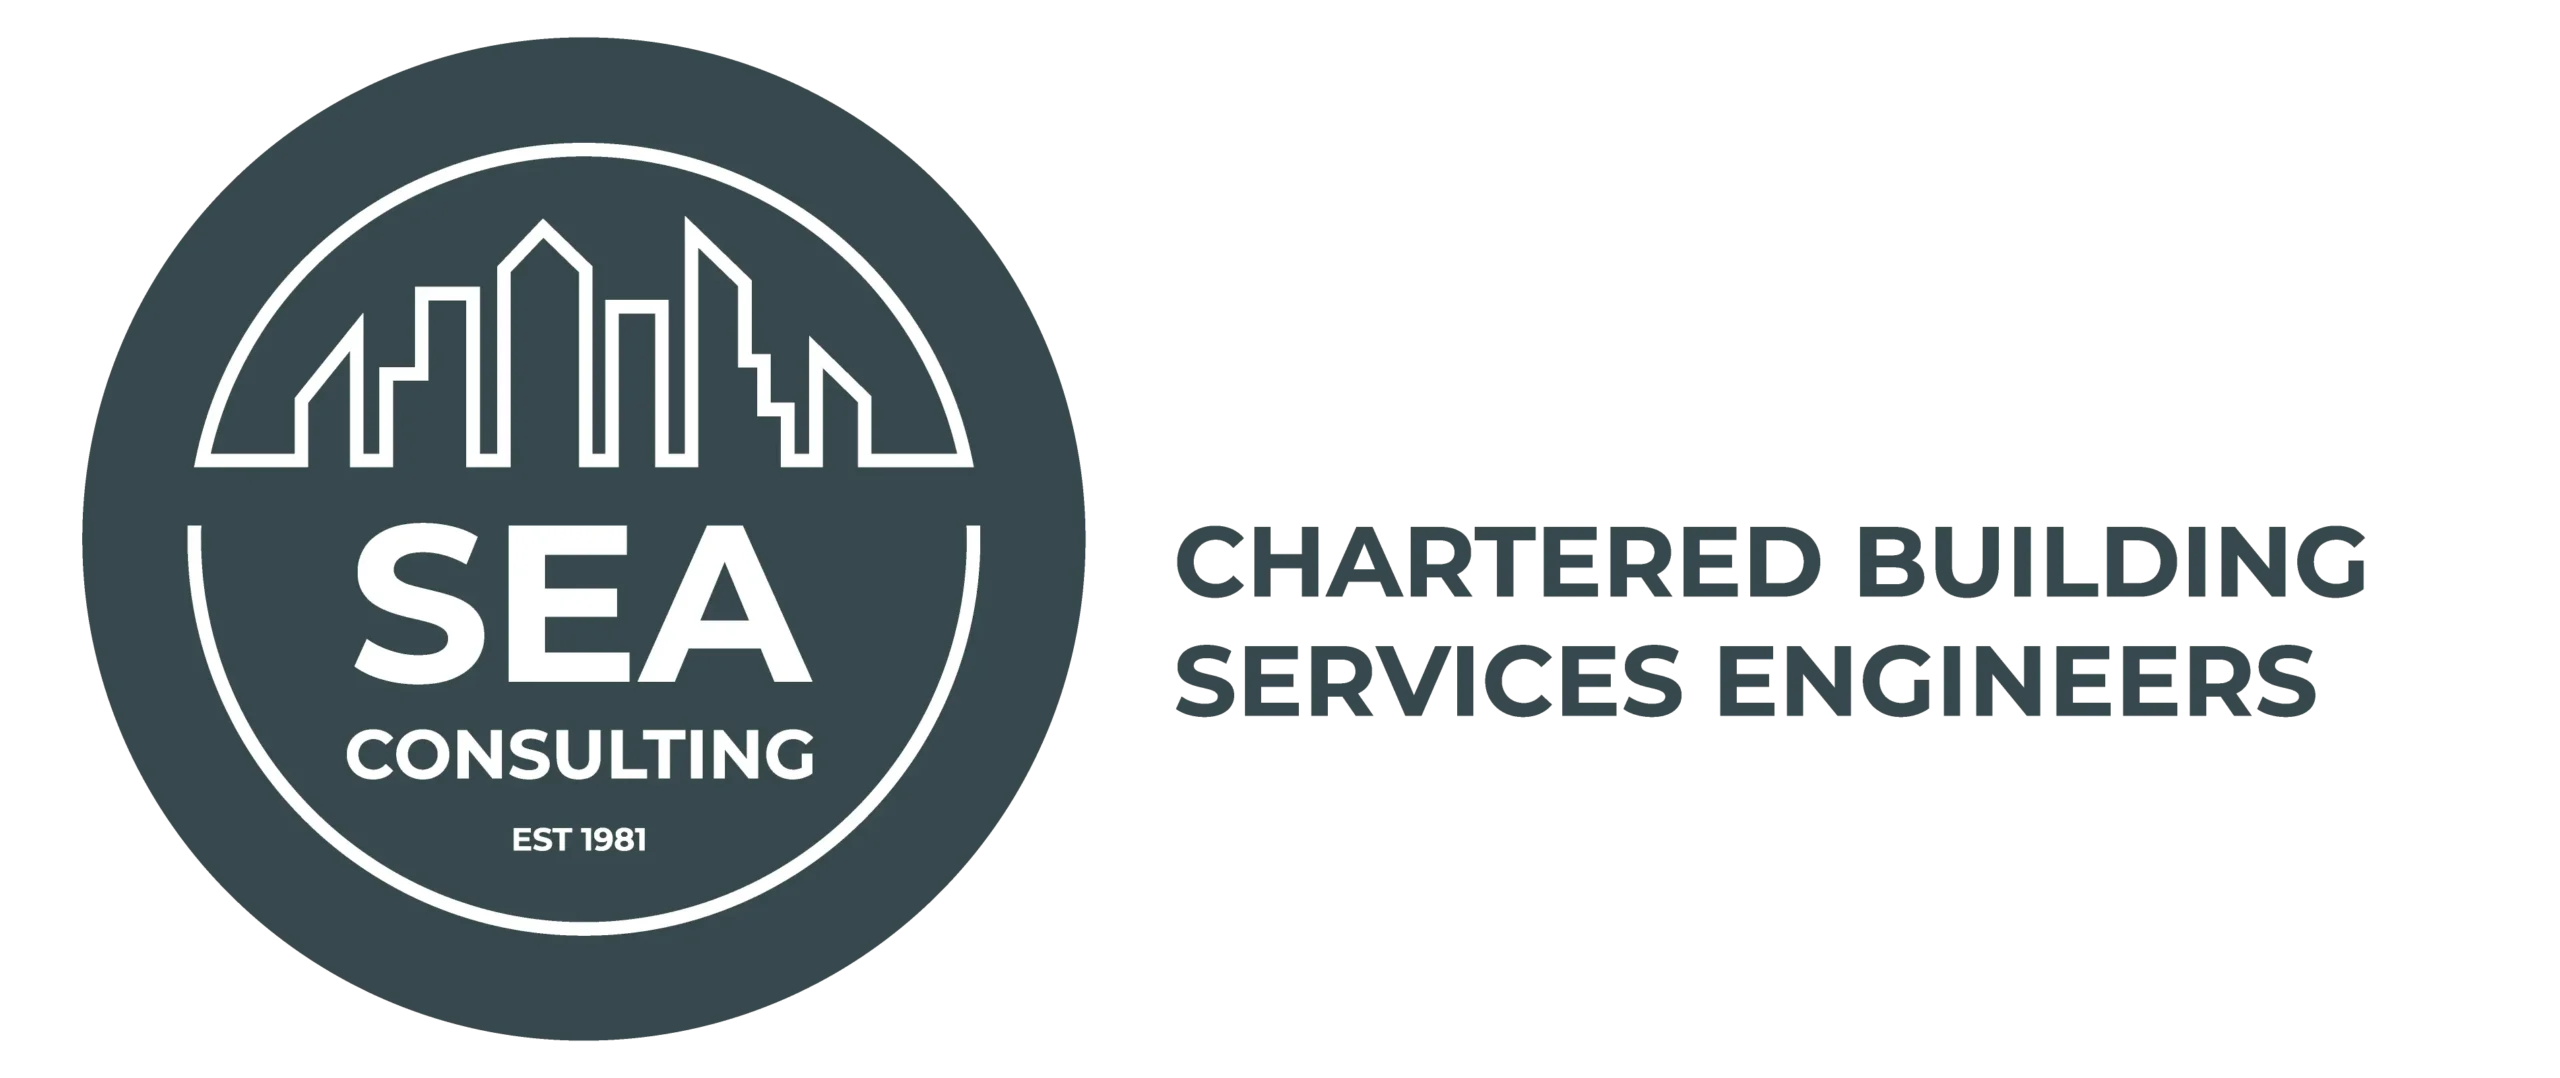 SEA Consulting Logo - Established 1981